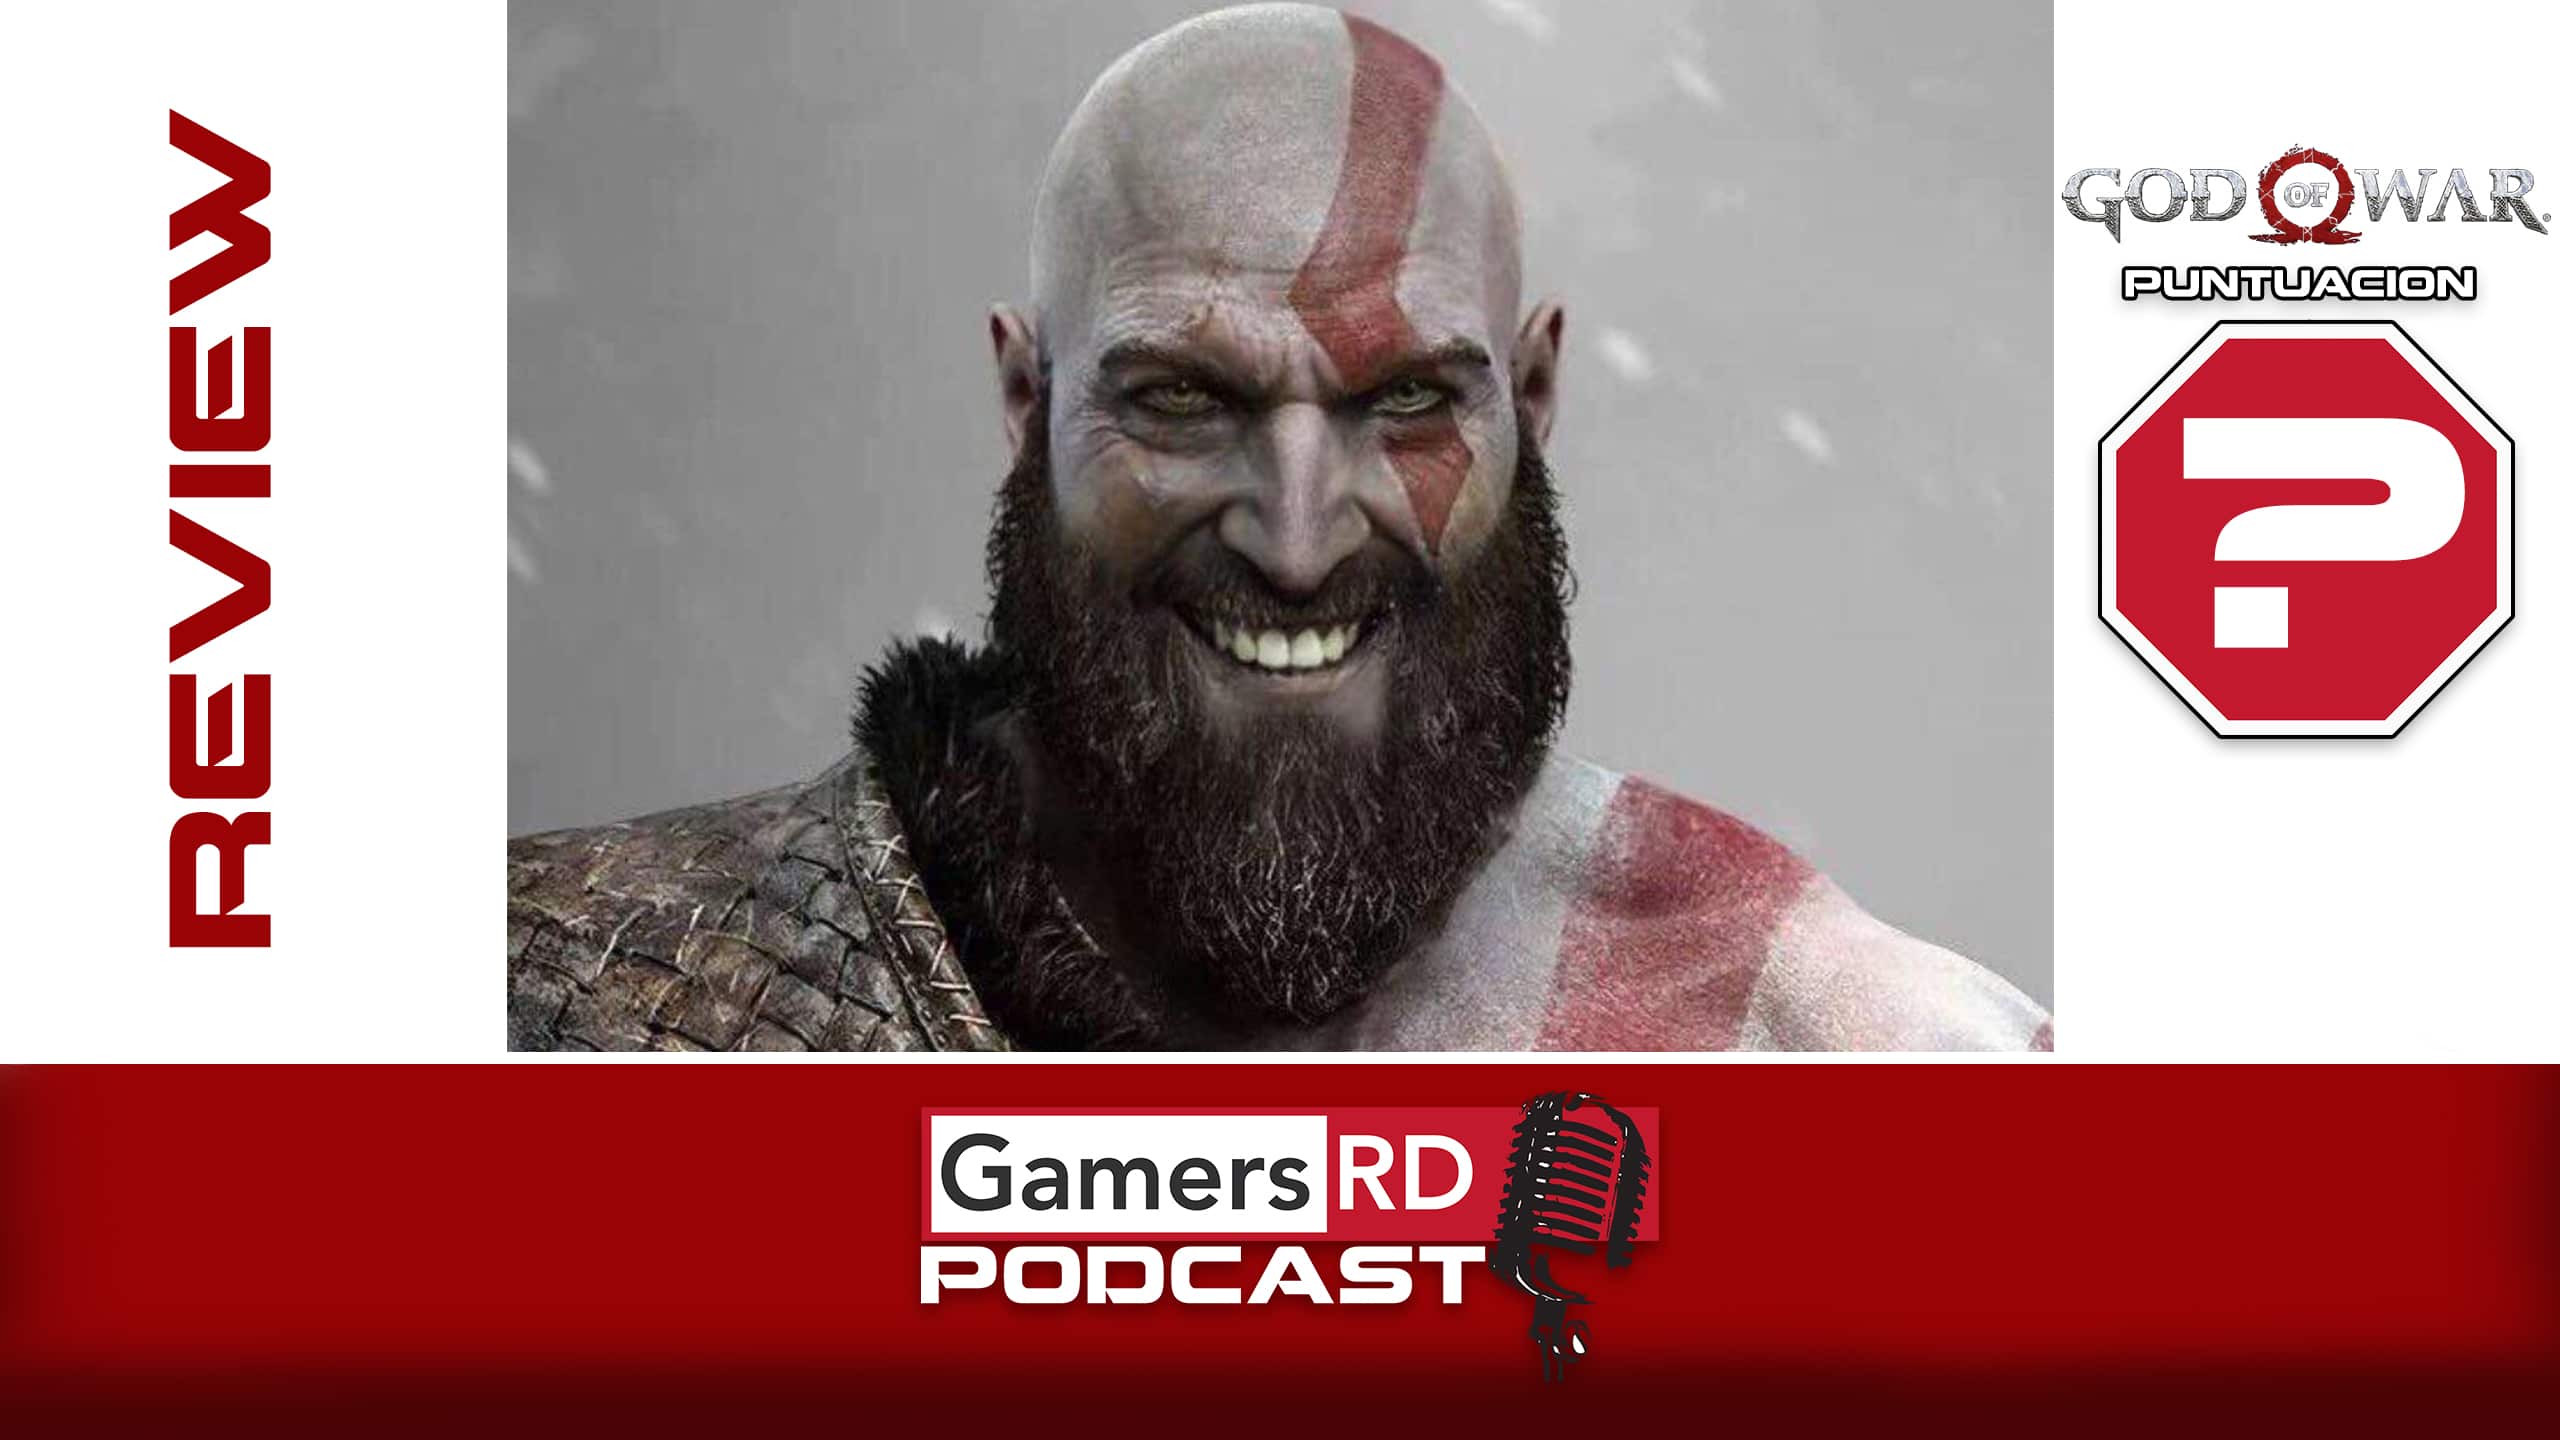 GamersRD Podcast #11 God of War Review